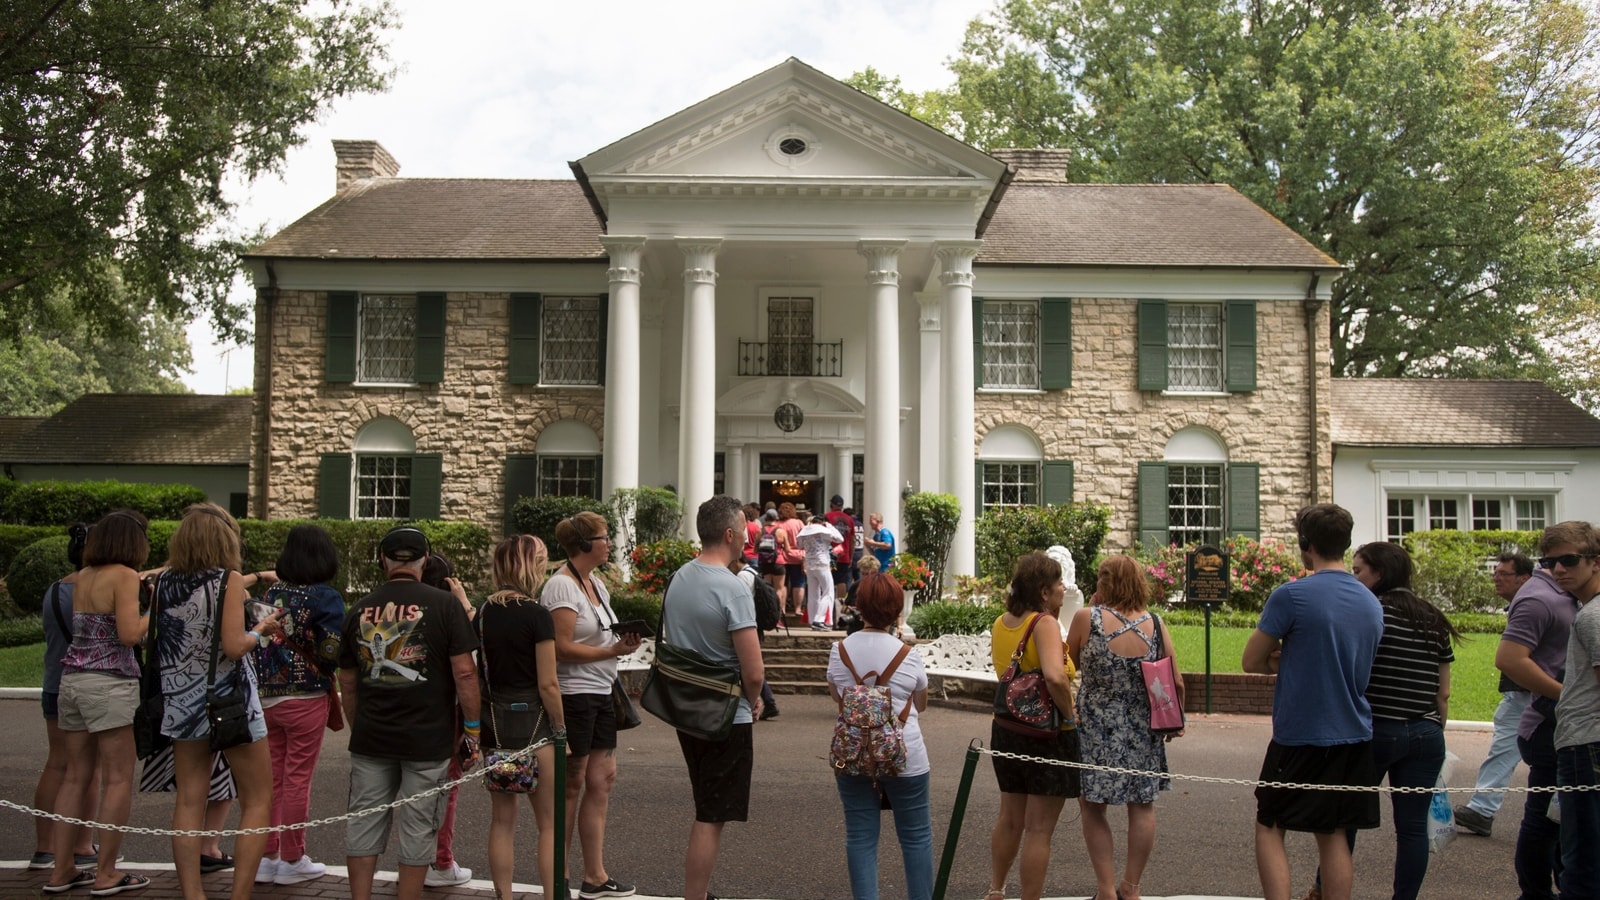 Tennessee judge blocks auction of Elvis Presley's iconic Graceland mansion